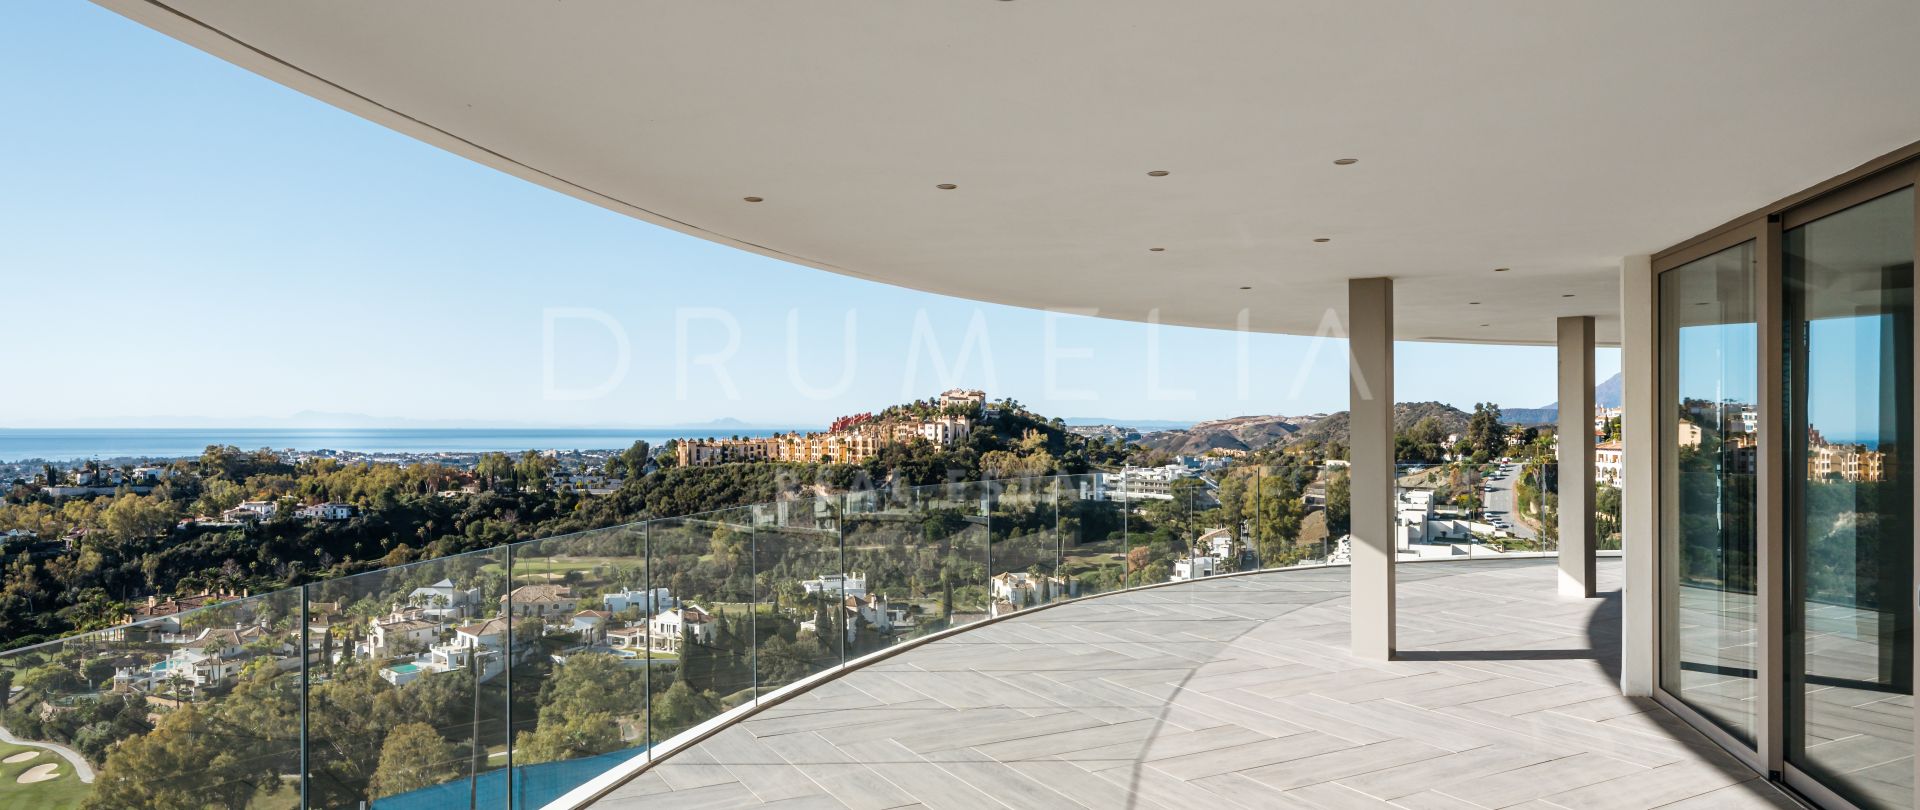 The View Soul - Espectacular apartamento moderno de lujo a estrenar con impresionantes vistas panorámicas al mar en Benahavís